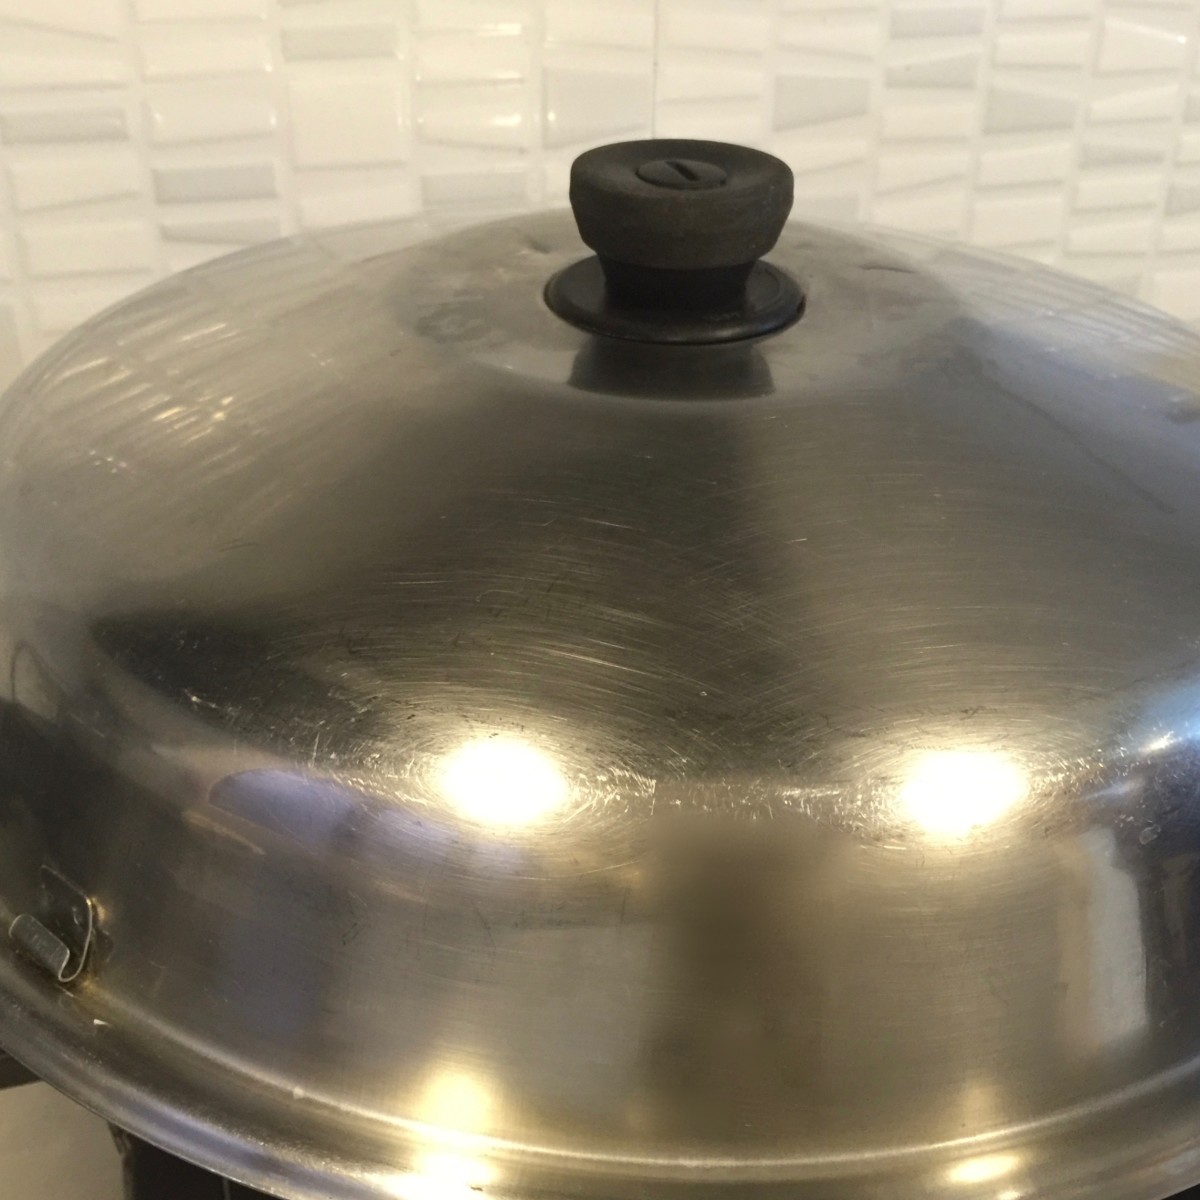 Steamed Shiitake Mushroom Beancurd 蒸香菇豆腐 - Steam beancurd for 10 minutes